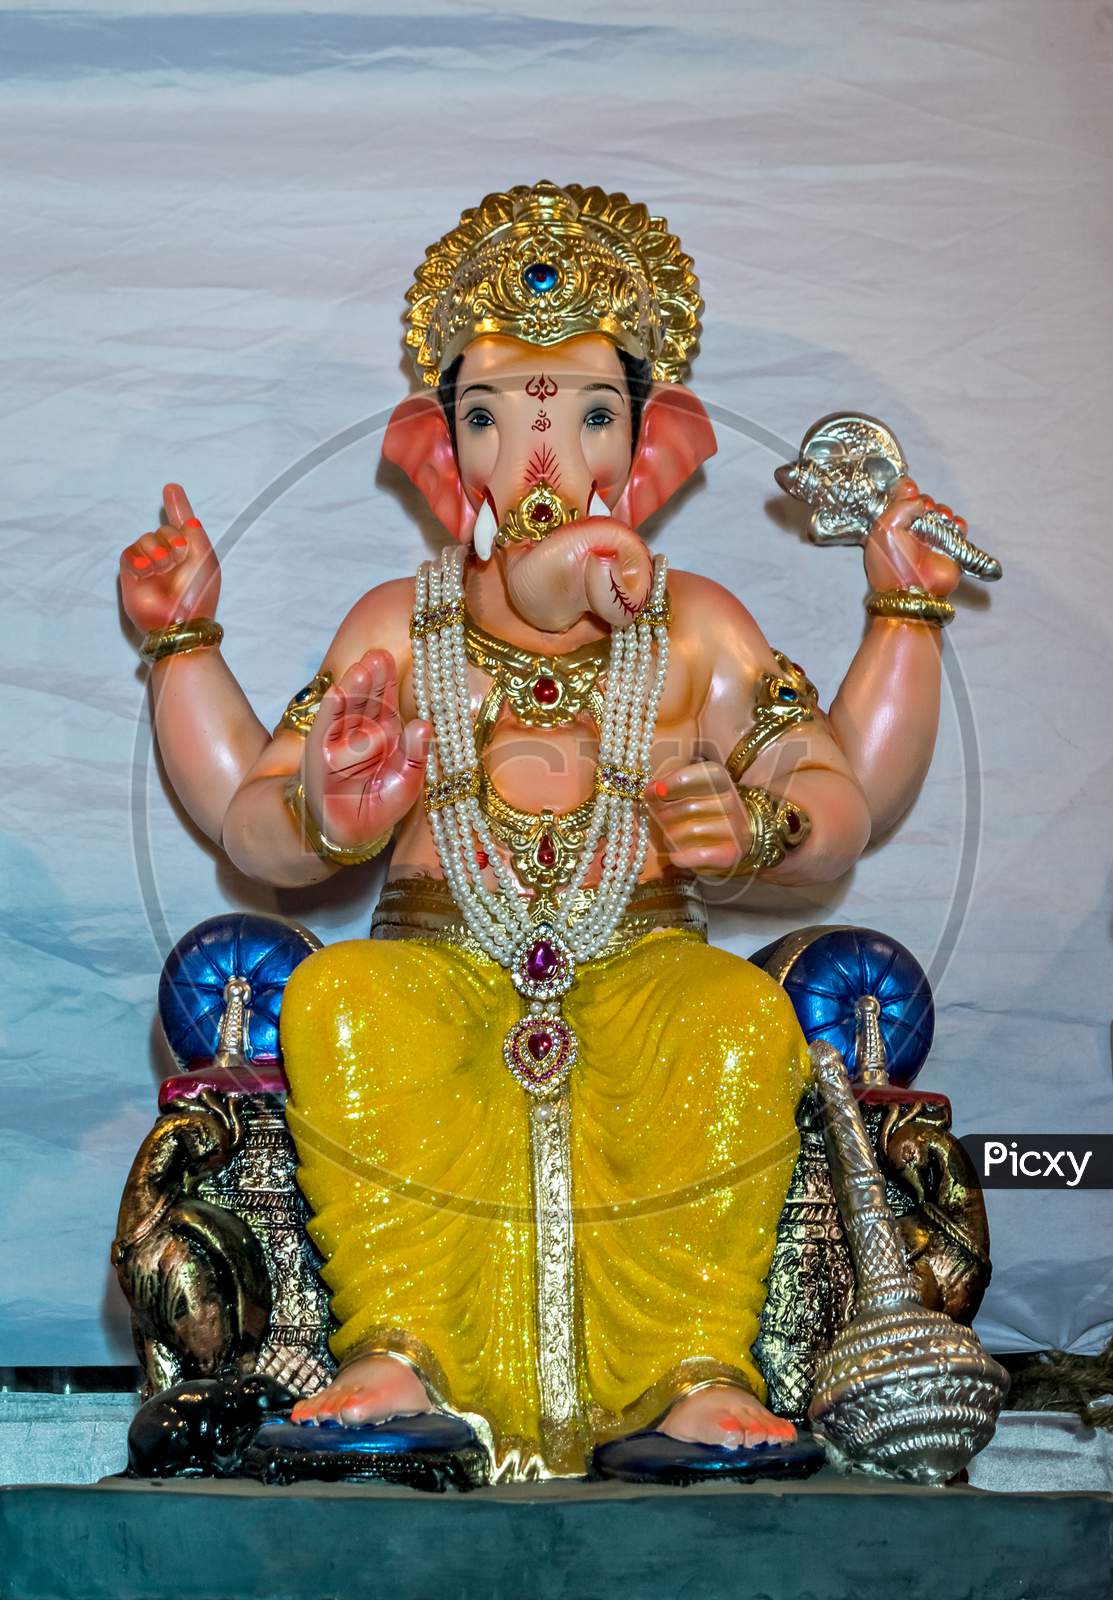 Freshly Made, Painted, Hand Crafted Clay Idol Of Hindu God Lord Ganesha.